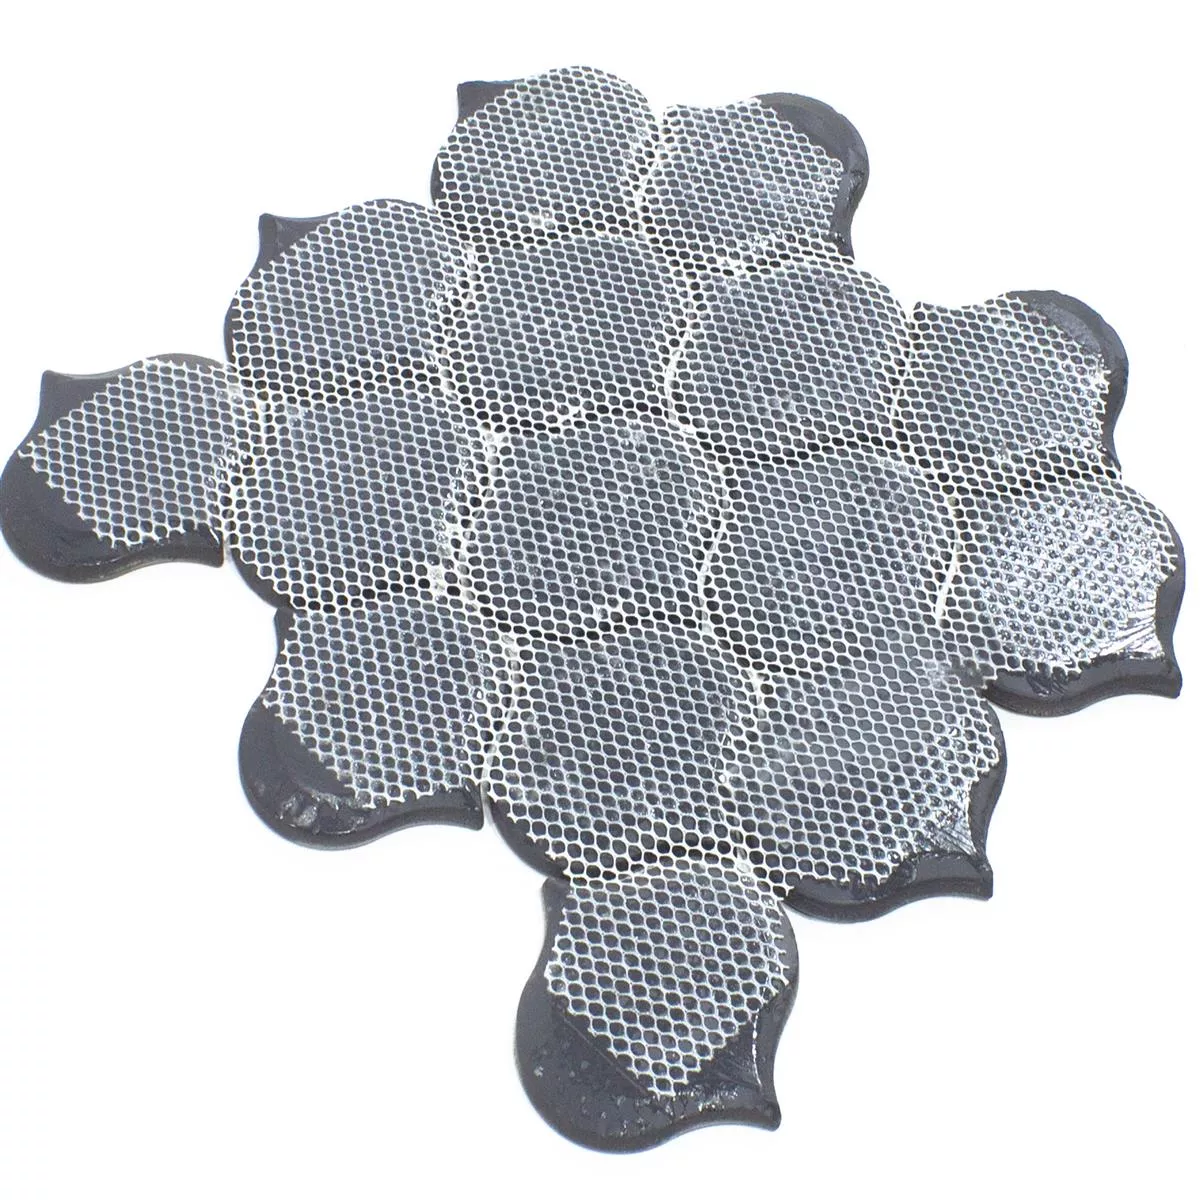 Glass Mosaic Tiles Andalucia Arabesque Grey